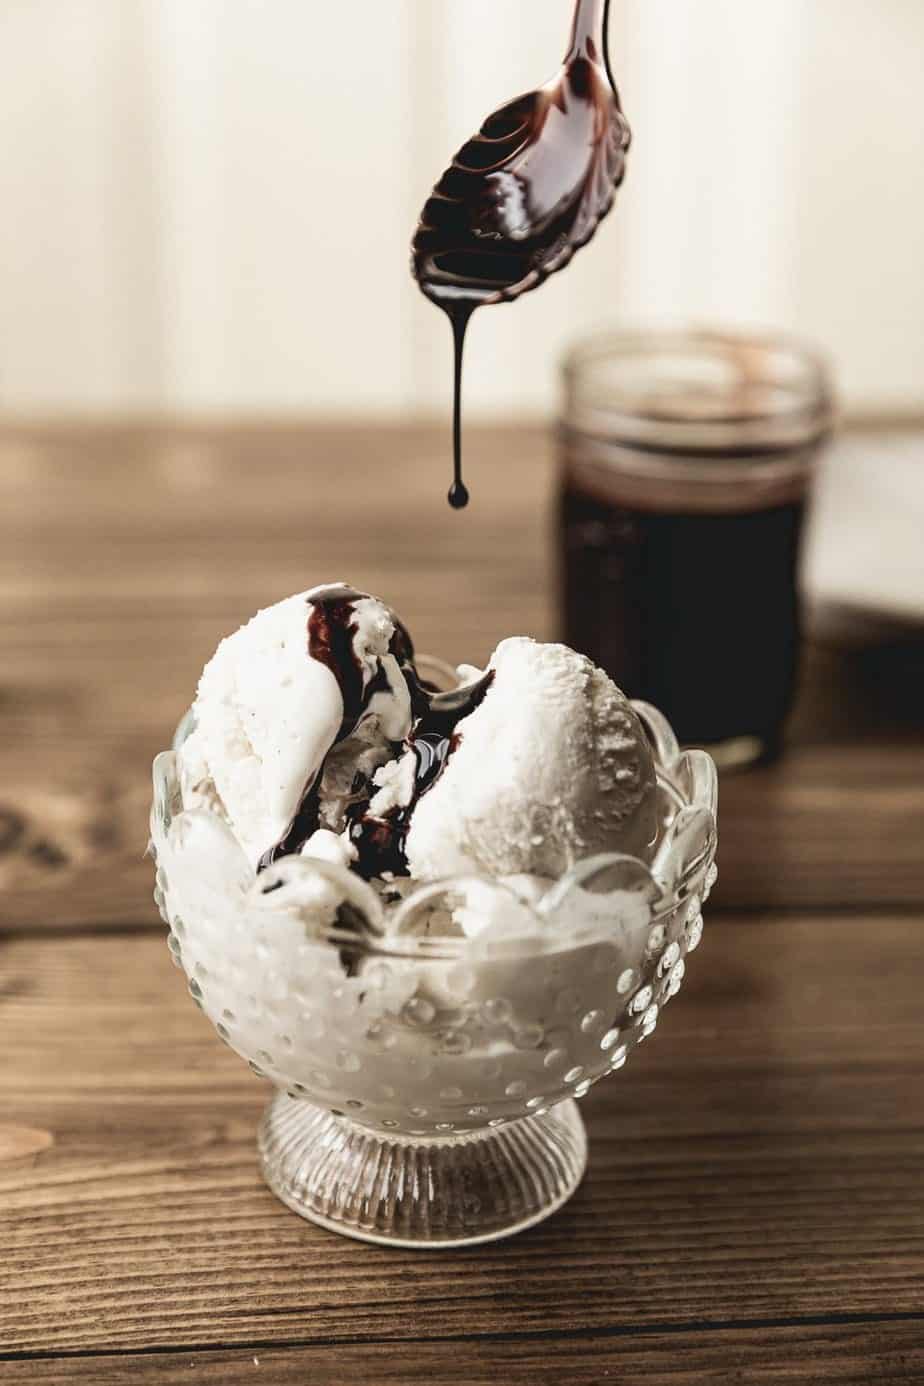 drizzling keto chocolate syrup on sugar-free ice cream